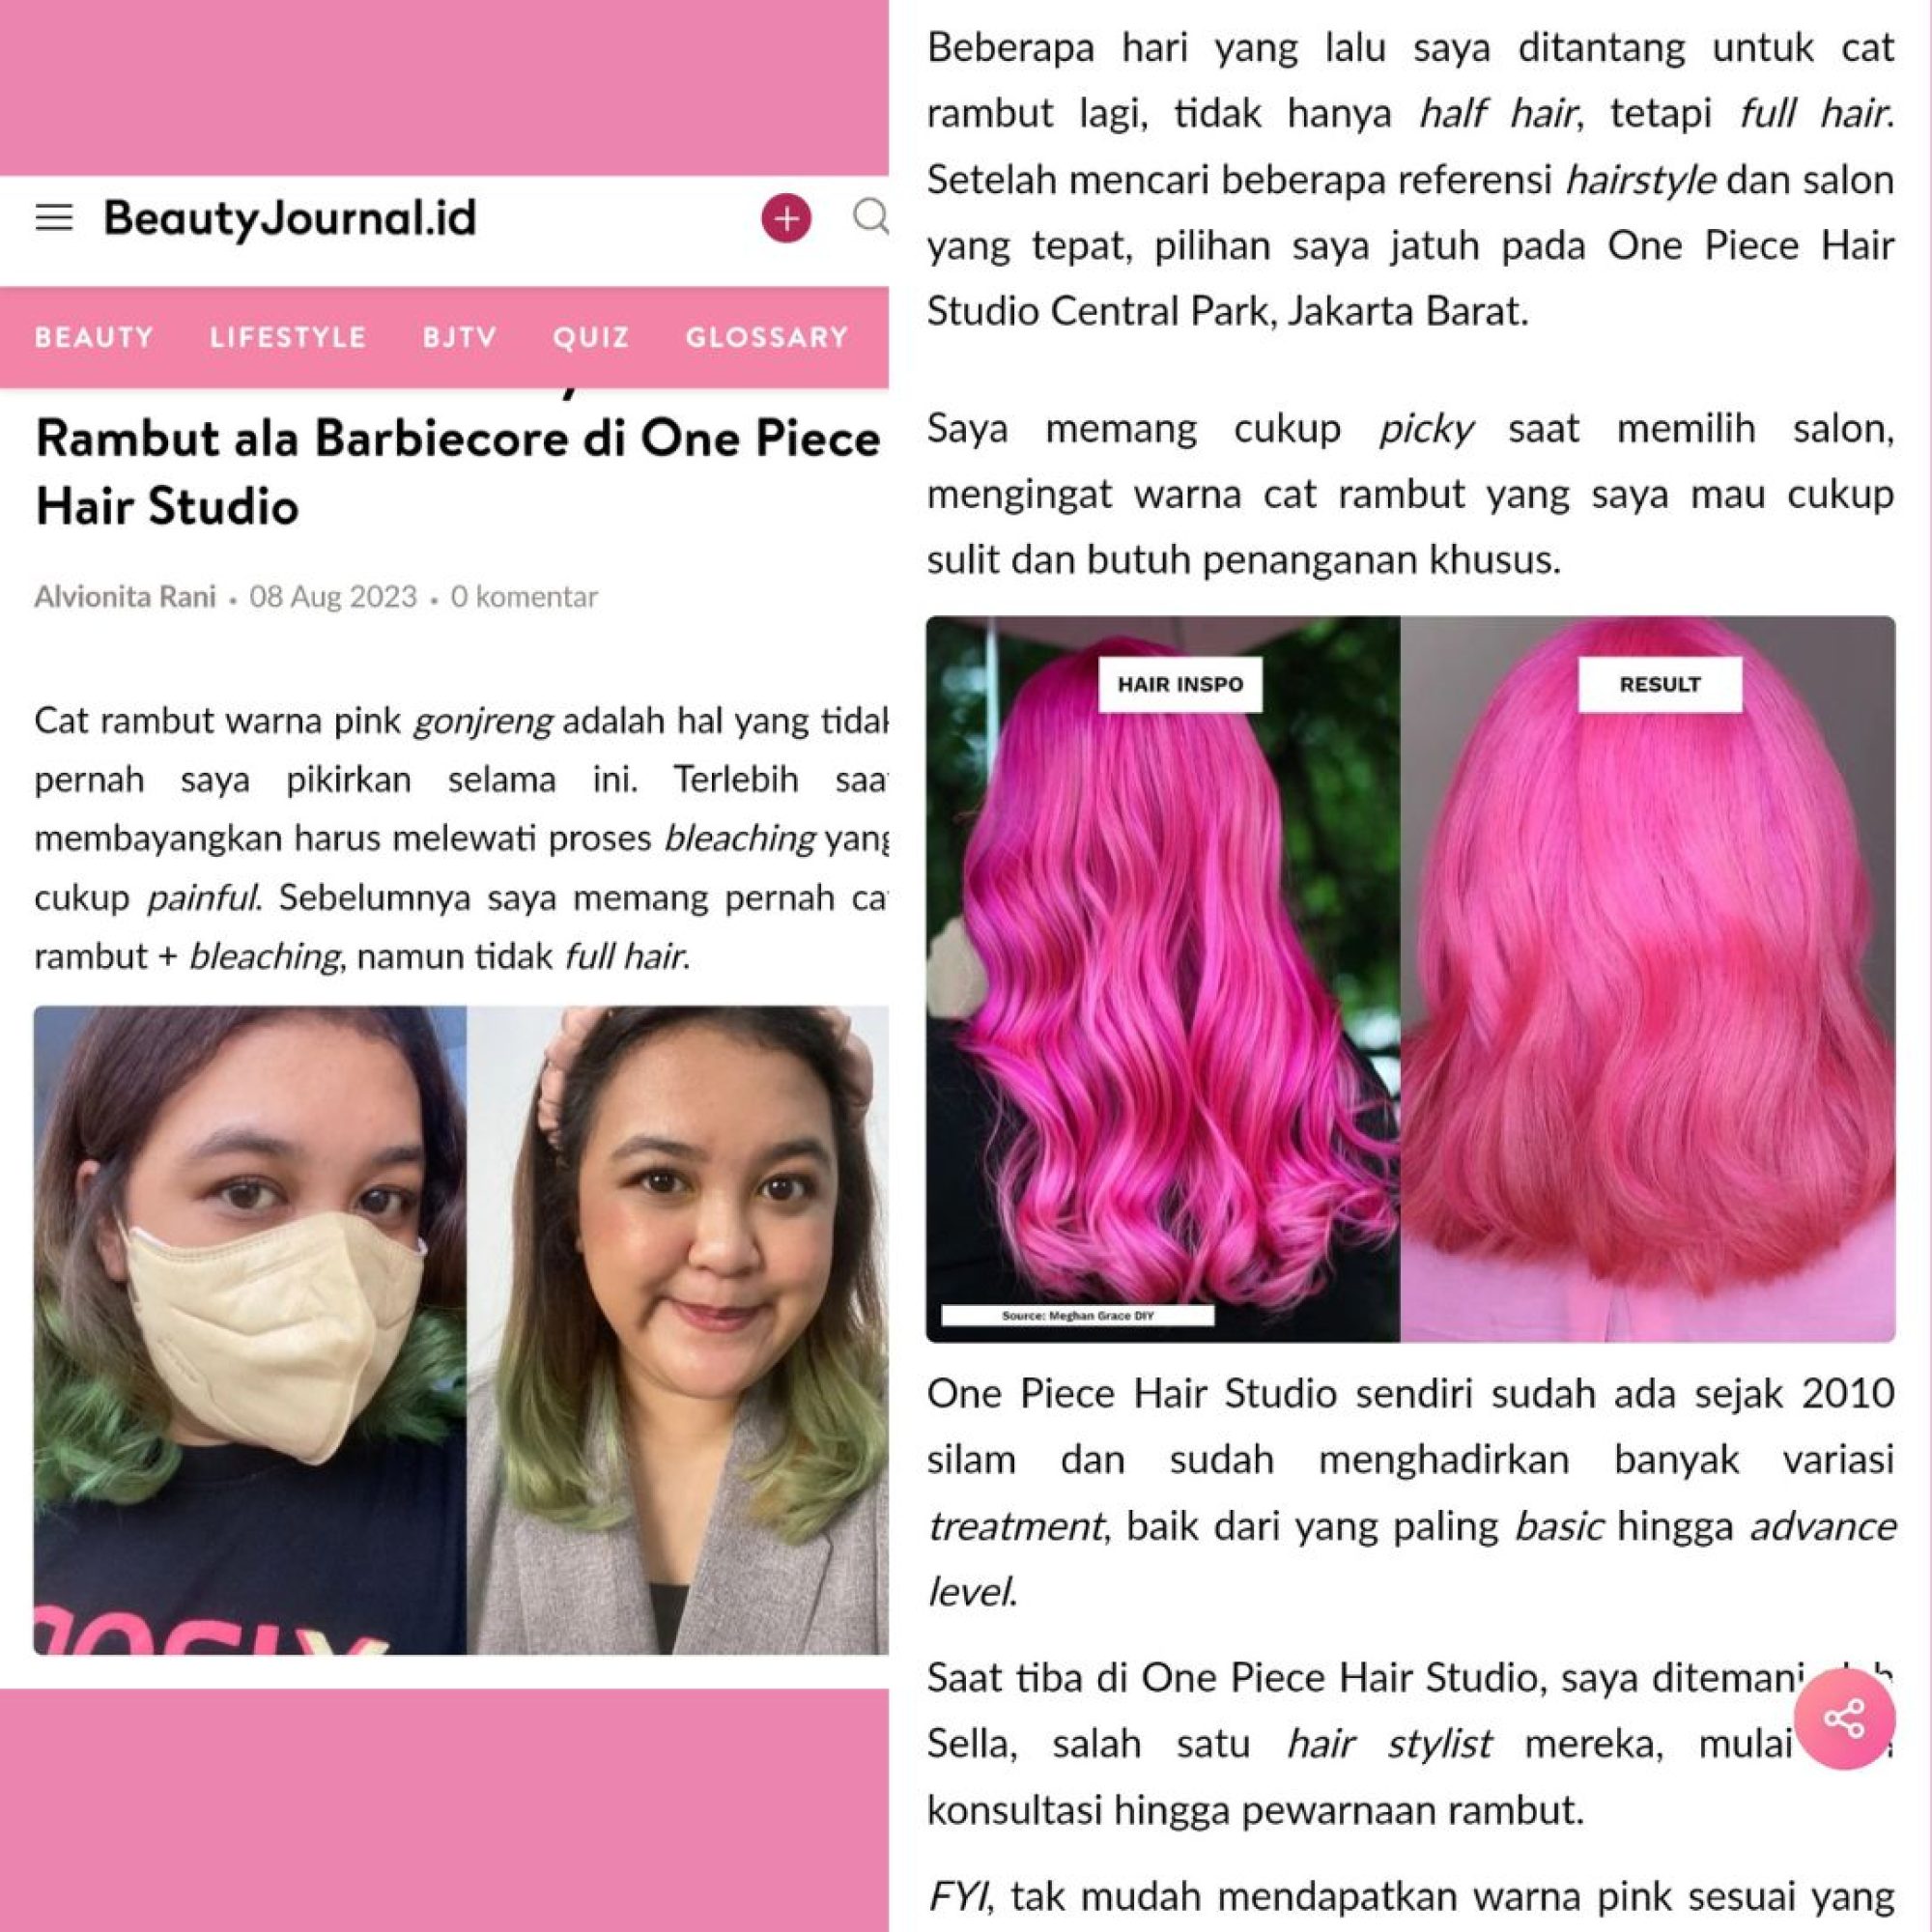 BeautyJournal.id Rambut ala barbiecore 8-agustus-2023